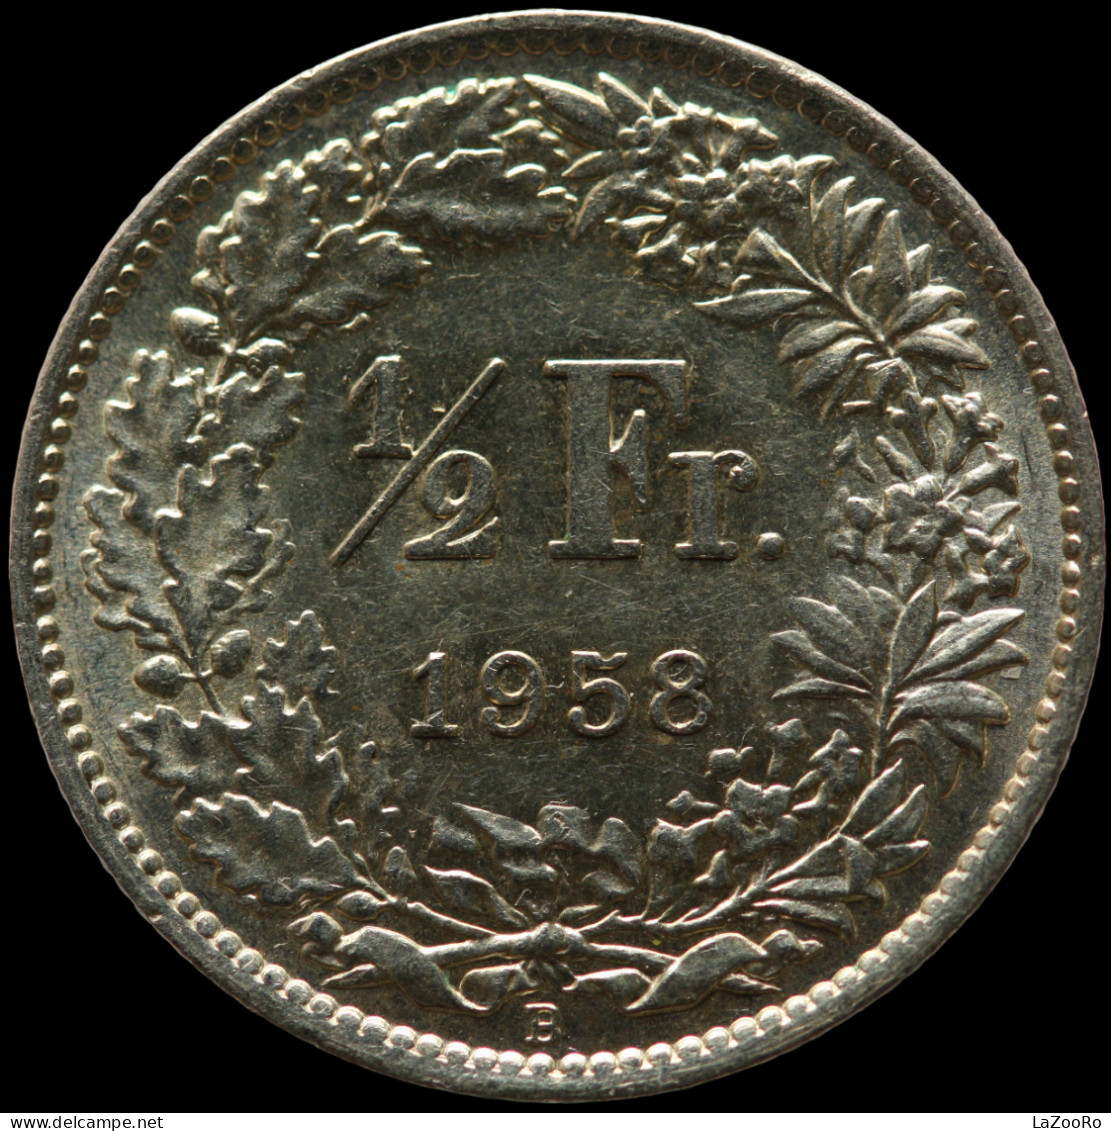 LaZooRo: Switzerland 1/2 Franc 1958 Specimen - Silver - Proeven